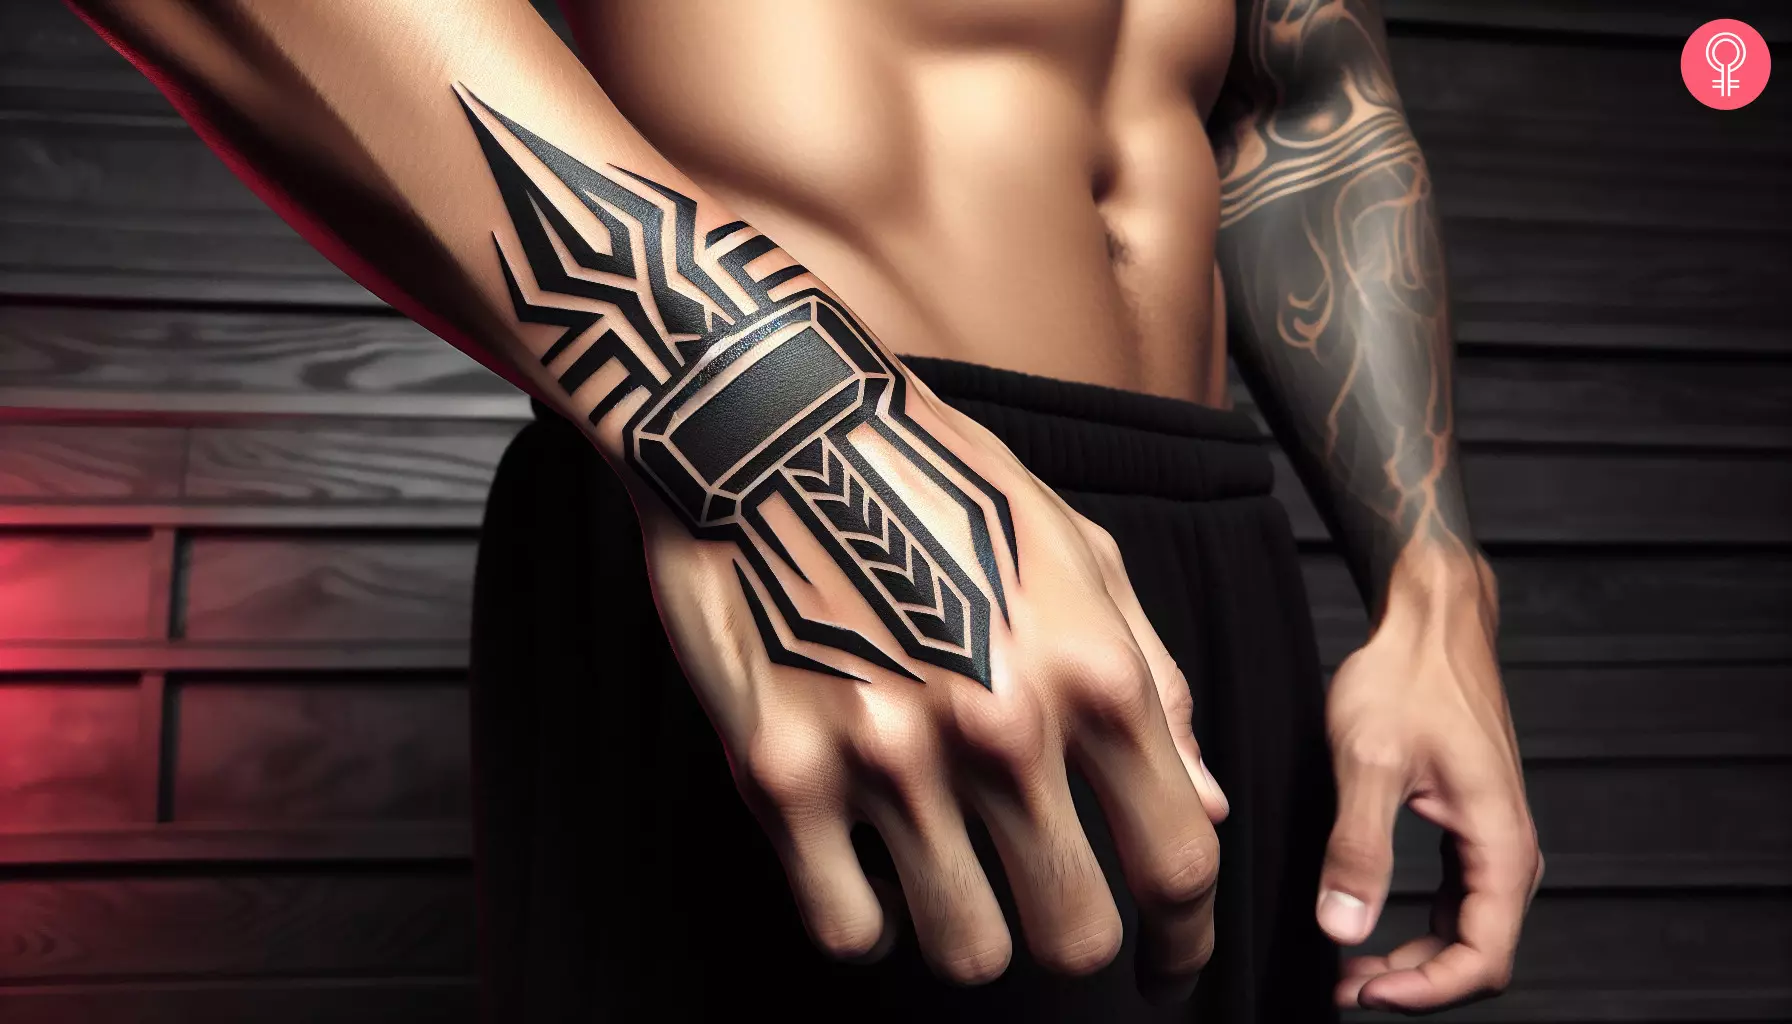 Thor hammer tattoo on the hand